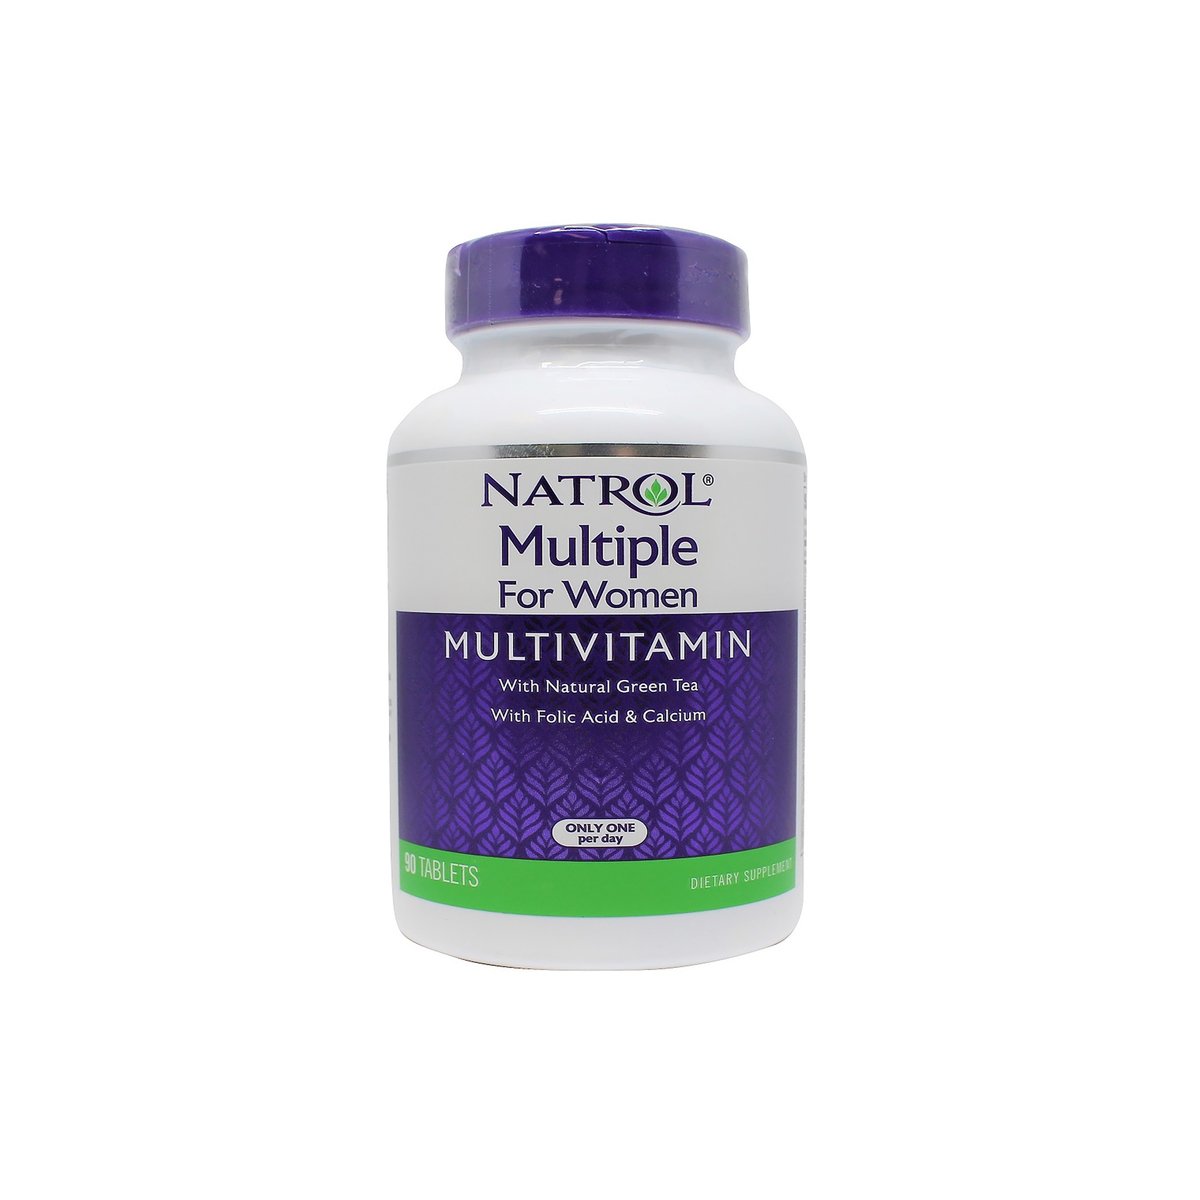 Natrol Multiple Multivitamin for Women 90 Tablets